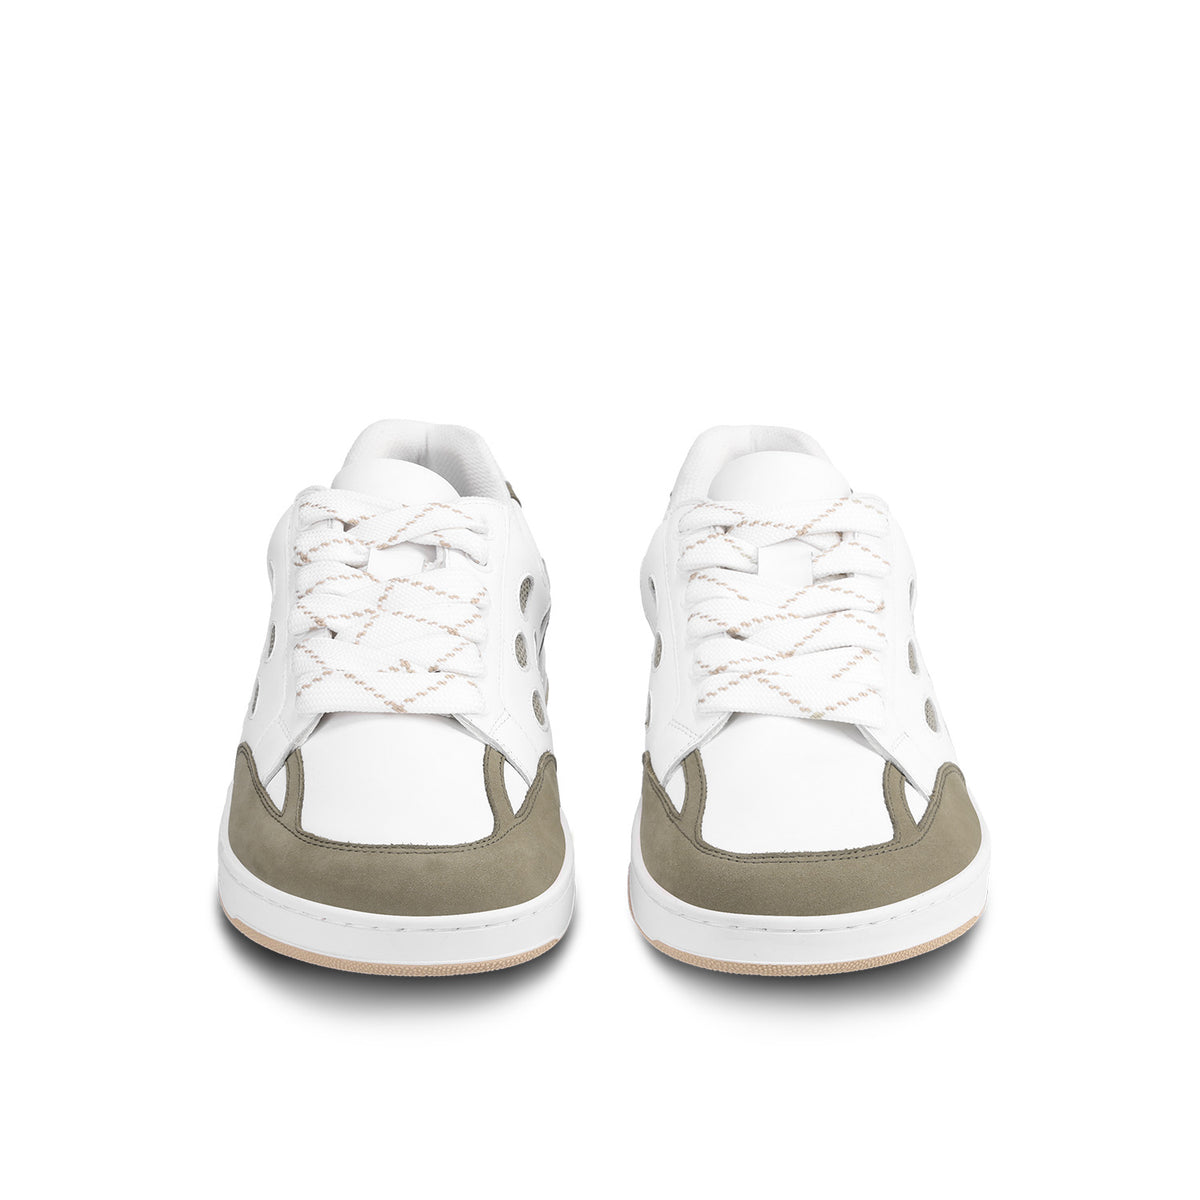 Barefoot Sneakers Barebarics Fusion - White & Army Brown 4  - OzBarefoot